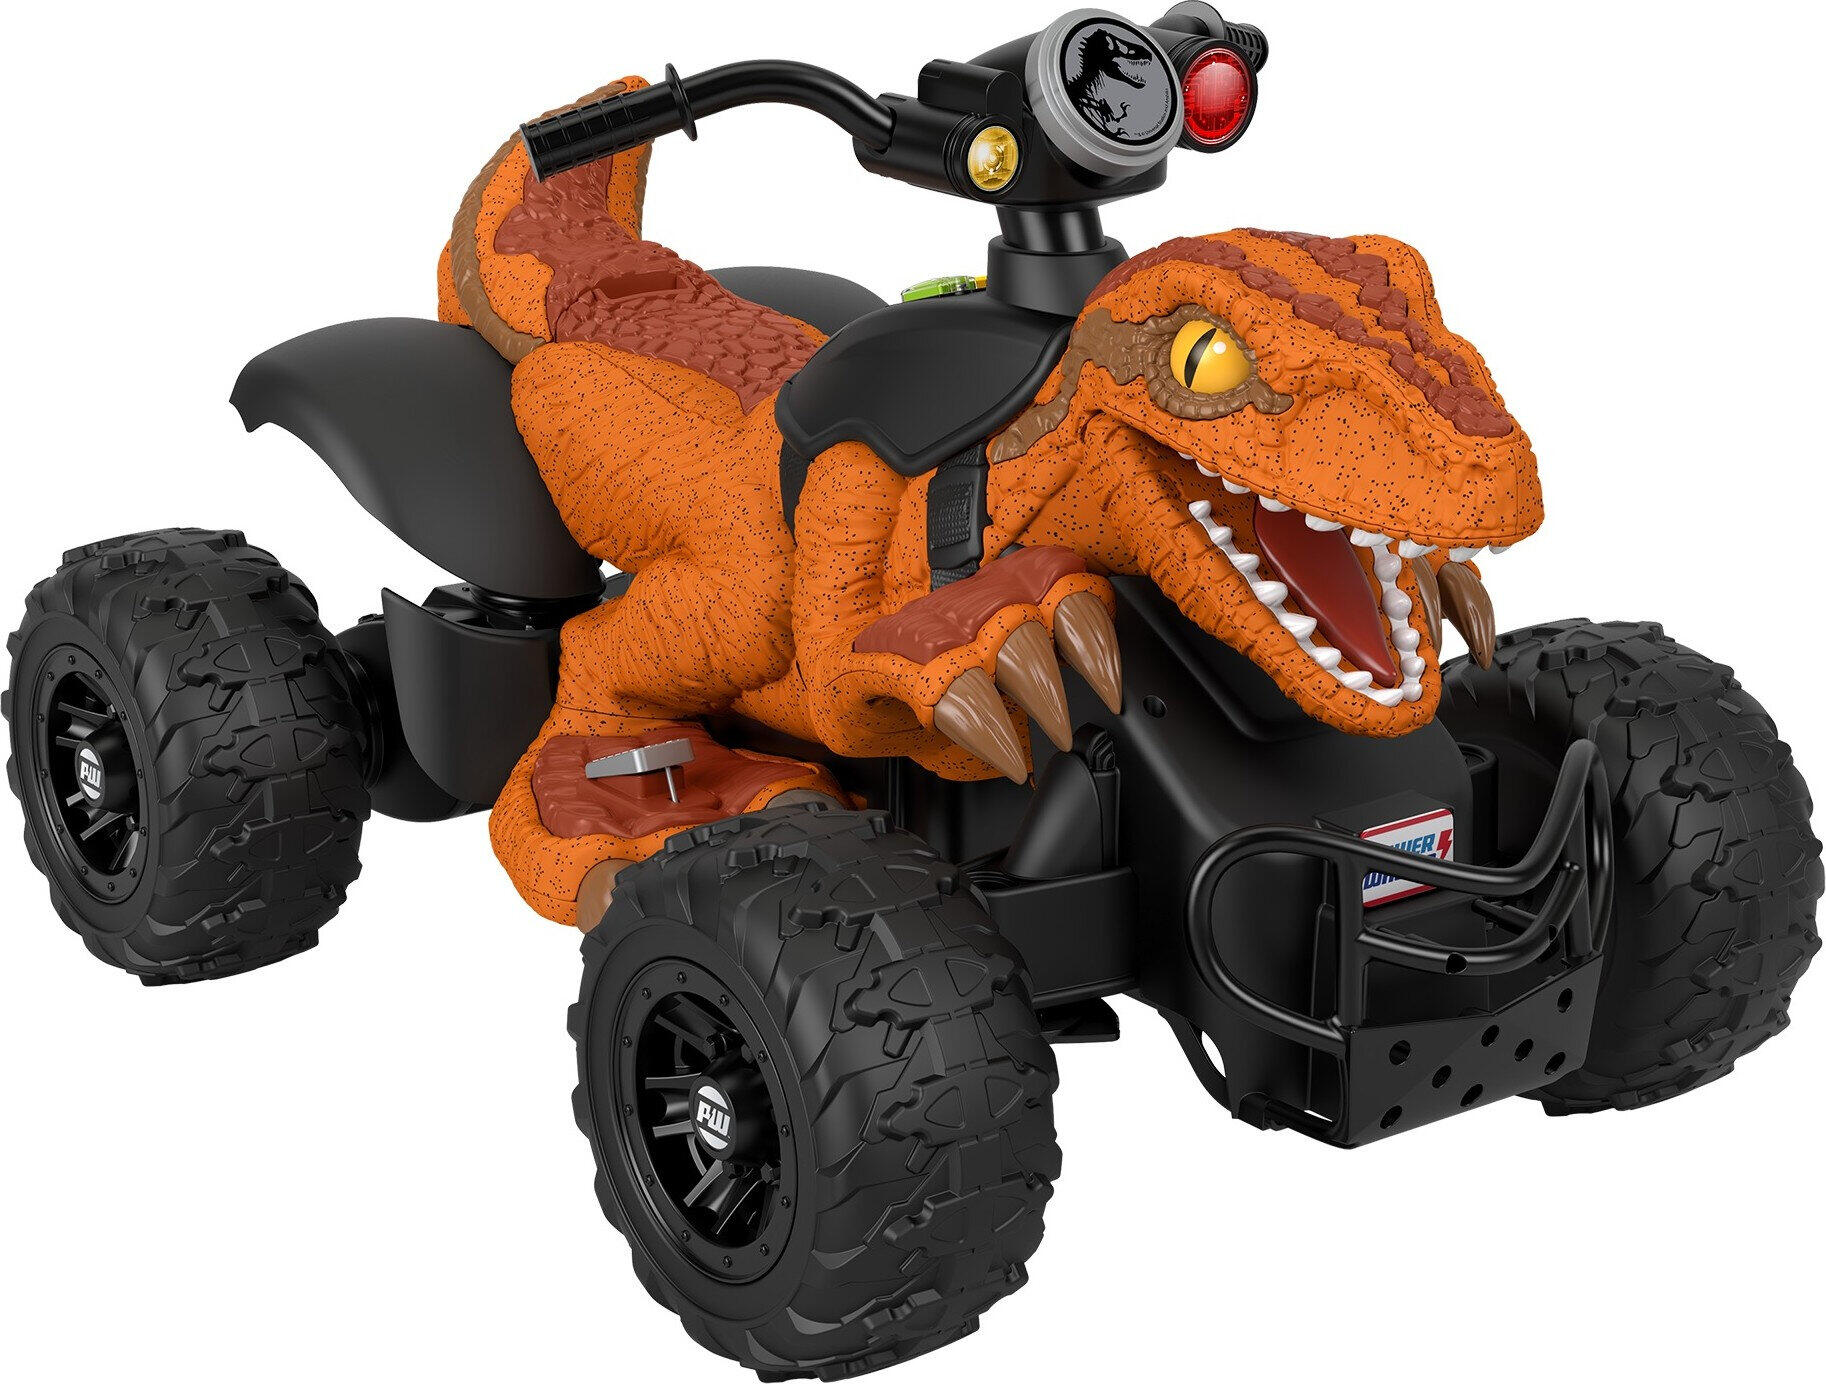 12V Power Wheels Jurassic World Dino Racer Battery-Powered Ride-On ATV Dinosaur Toy, Orange - image 1 of 7